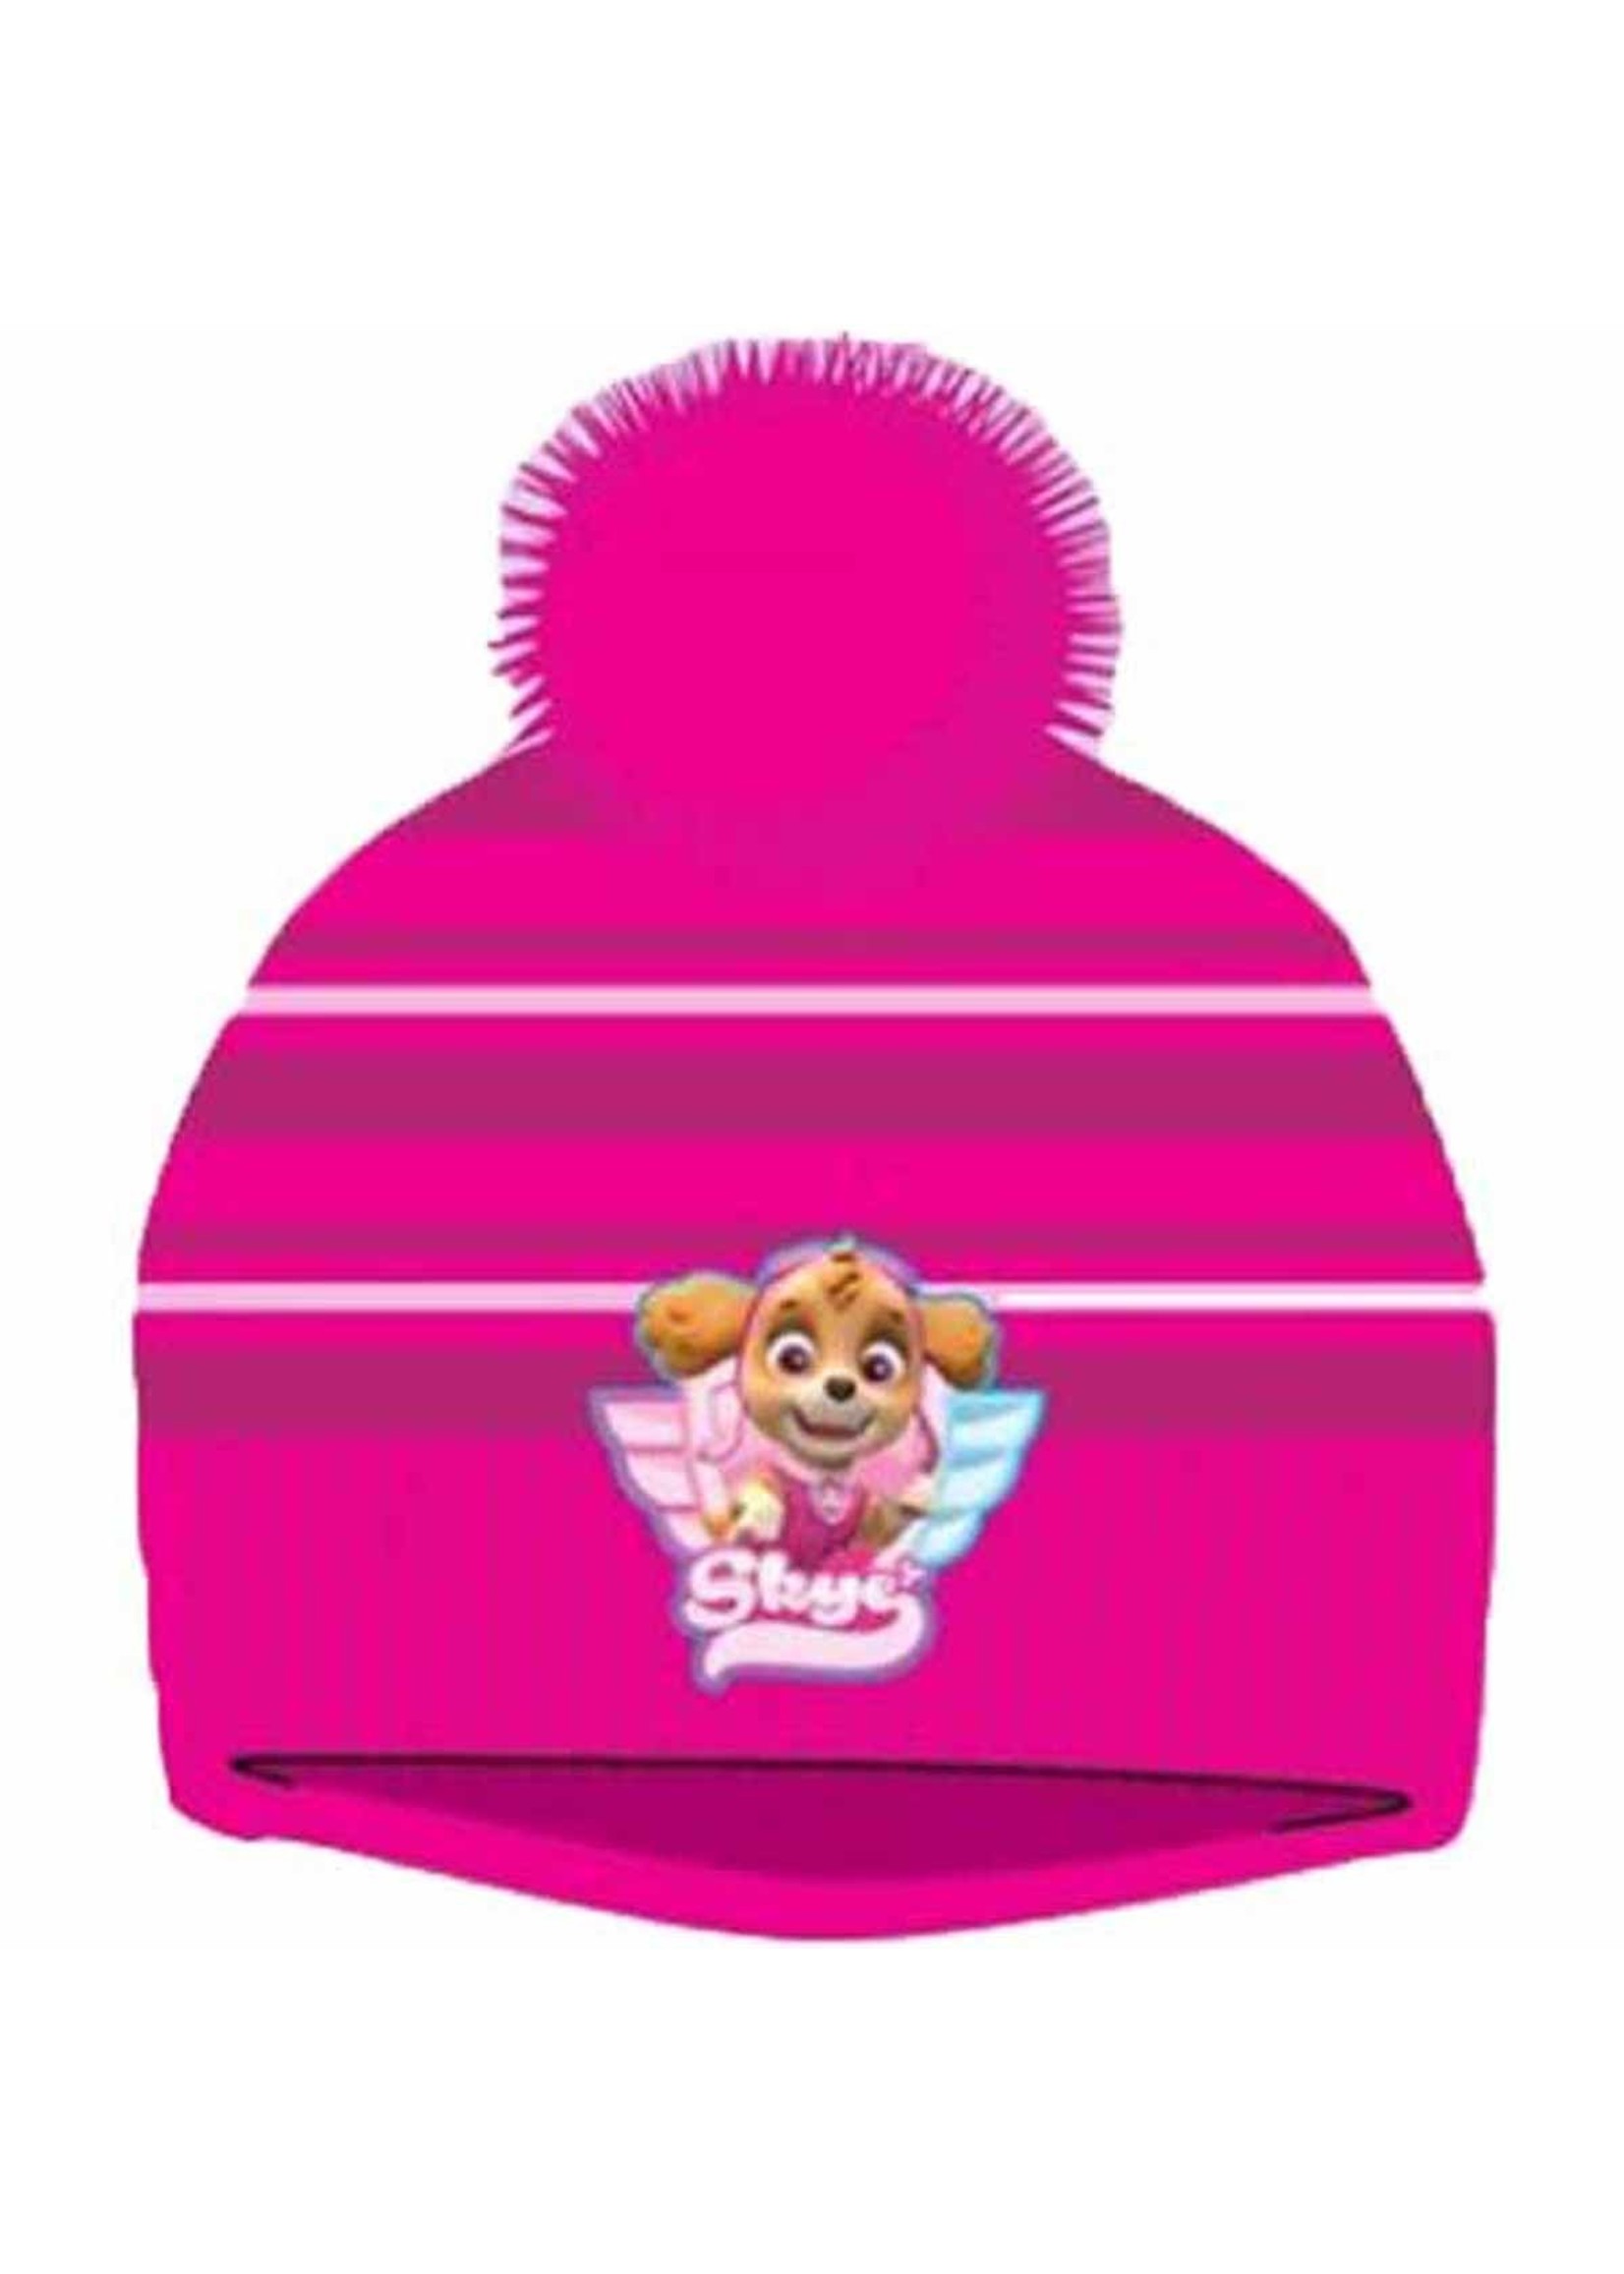 Nickelodeon Paw Patrol tricot hat from Nickelodeon dark pink